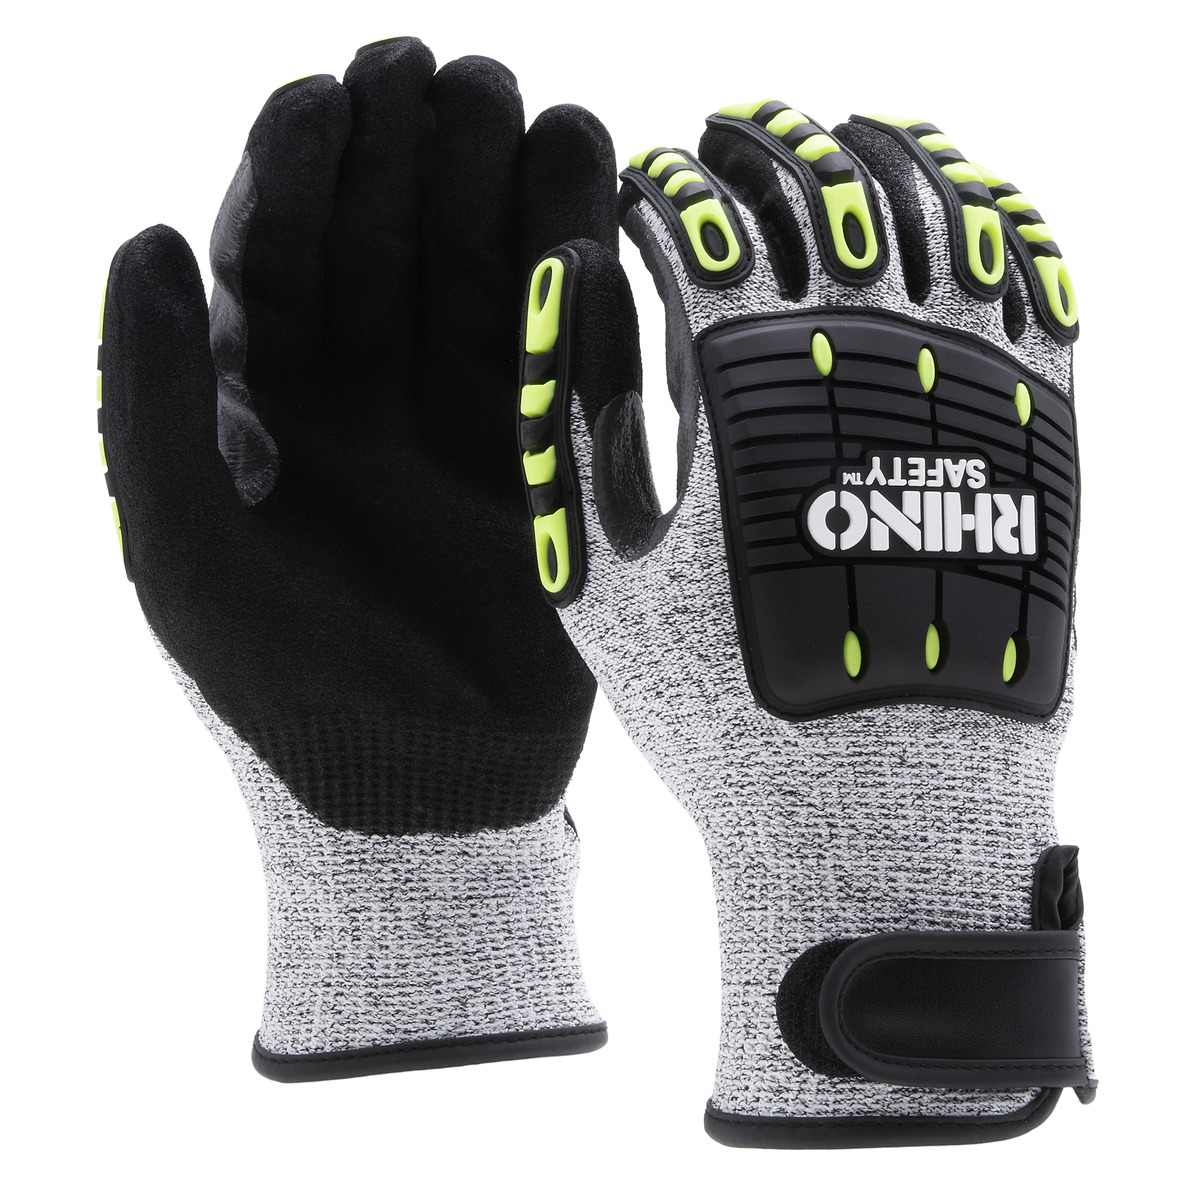 General Purpose Work Gloves: Medium, Nitrile Coated, Nylon 45-101-M